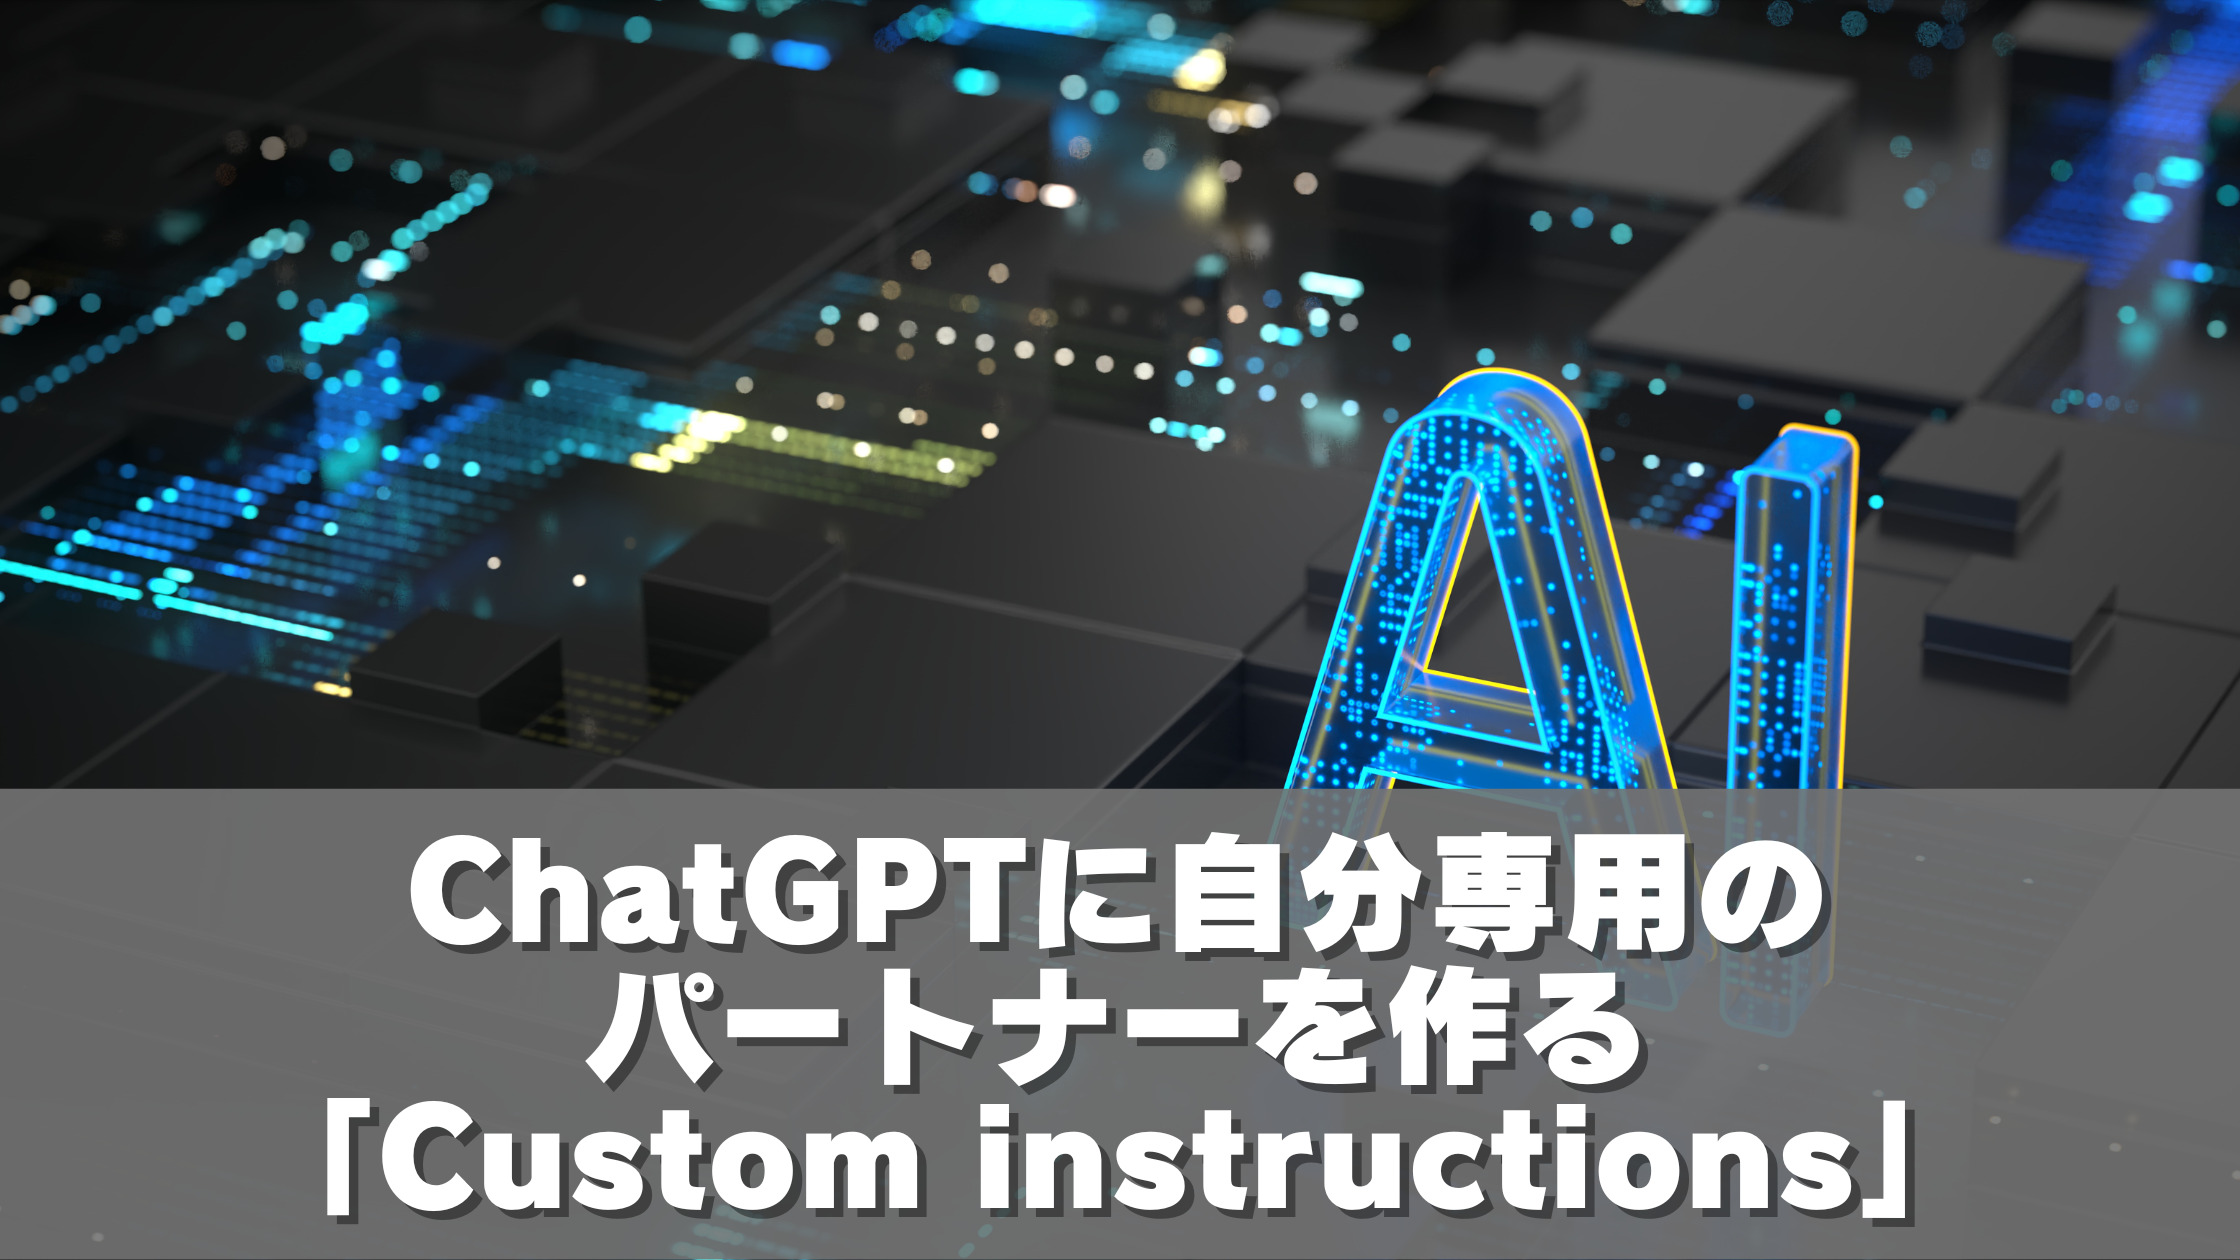 ChatGPTに自分専用のパートナーを作る「Custom instructions」